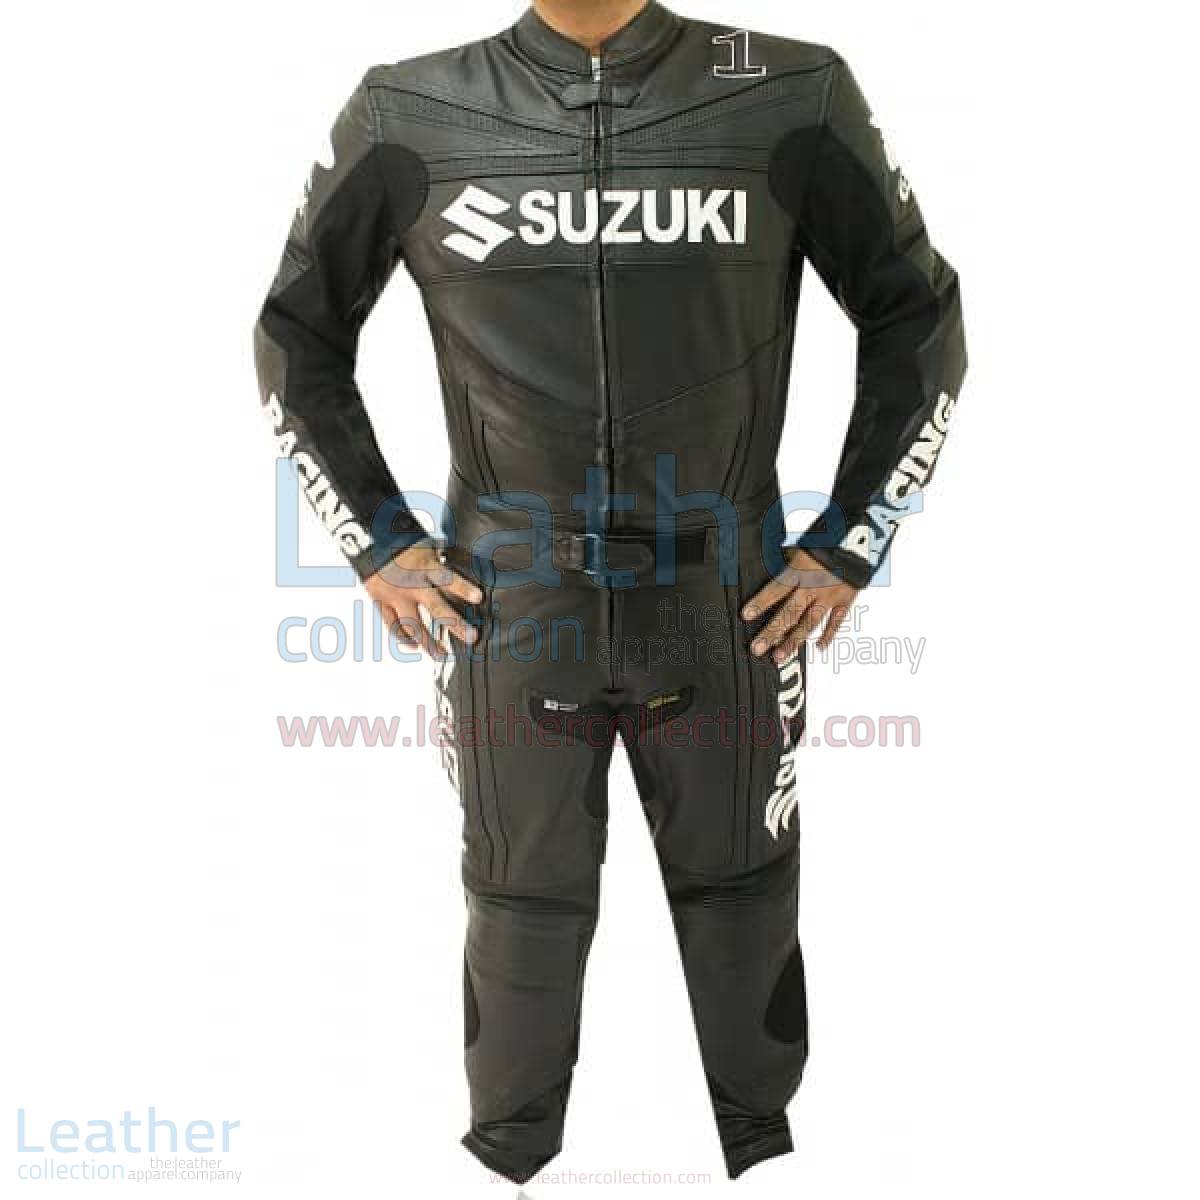 Suzuki Leather Racing Suit – Suzuki Suit